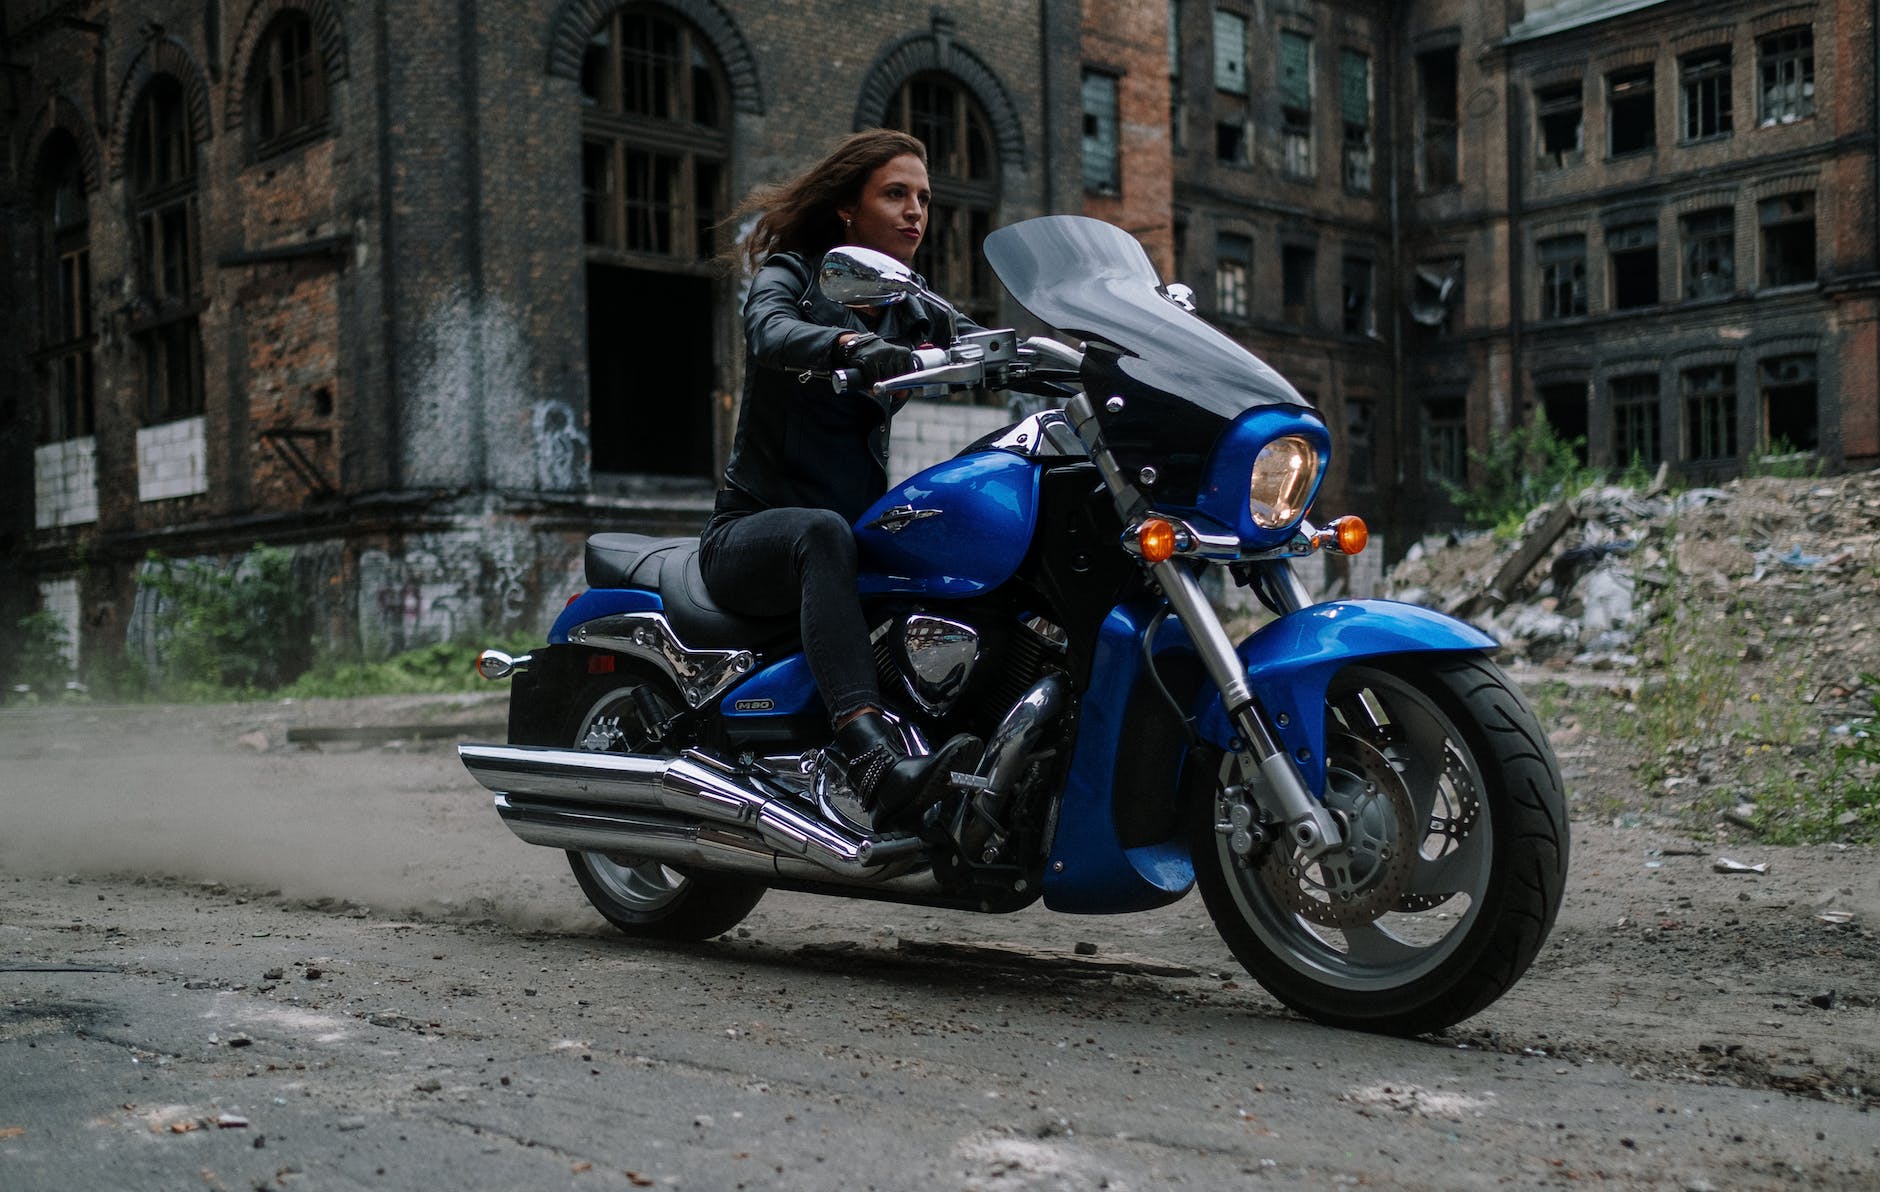 a woman riding a big motorcycle